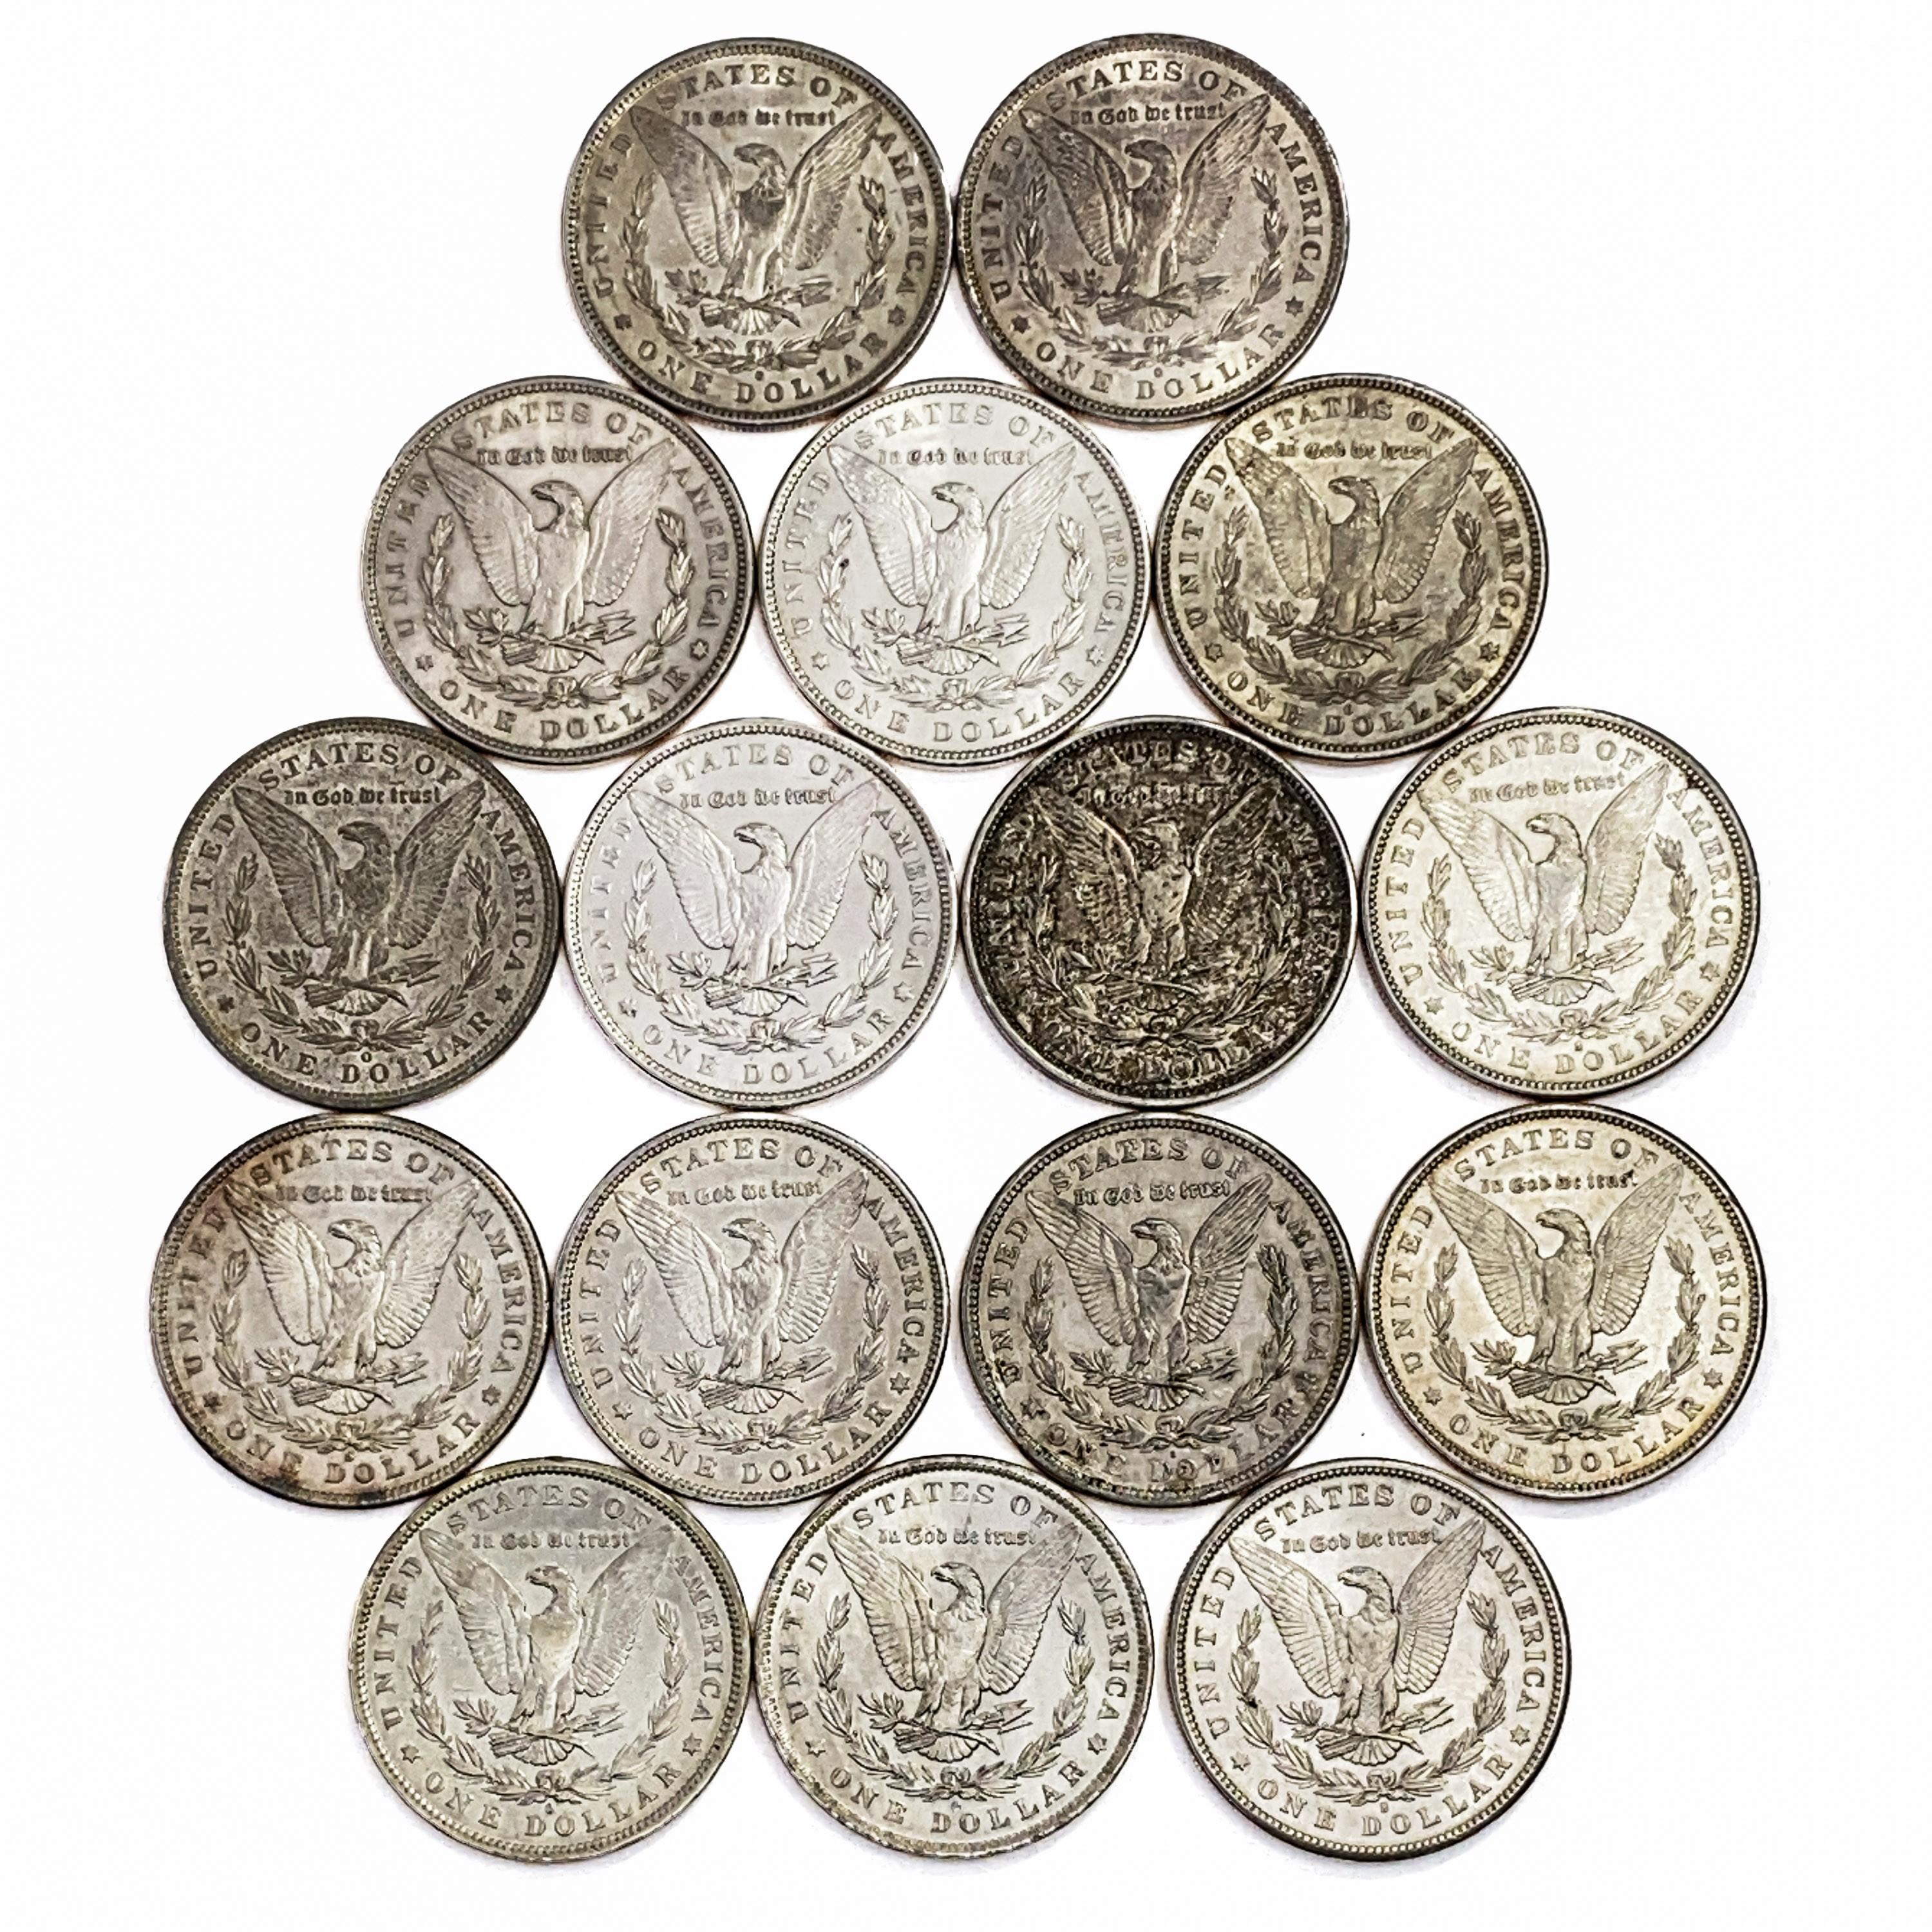 1881-1921 Roll of Morgan Silver Dollars [16 Coins]